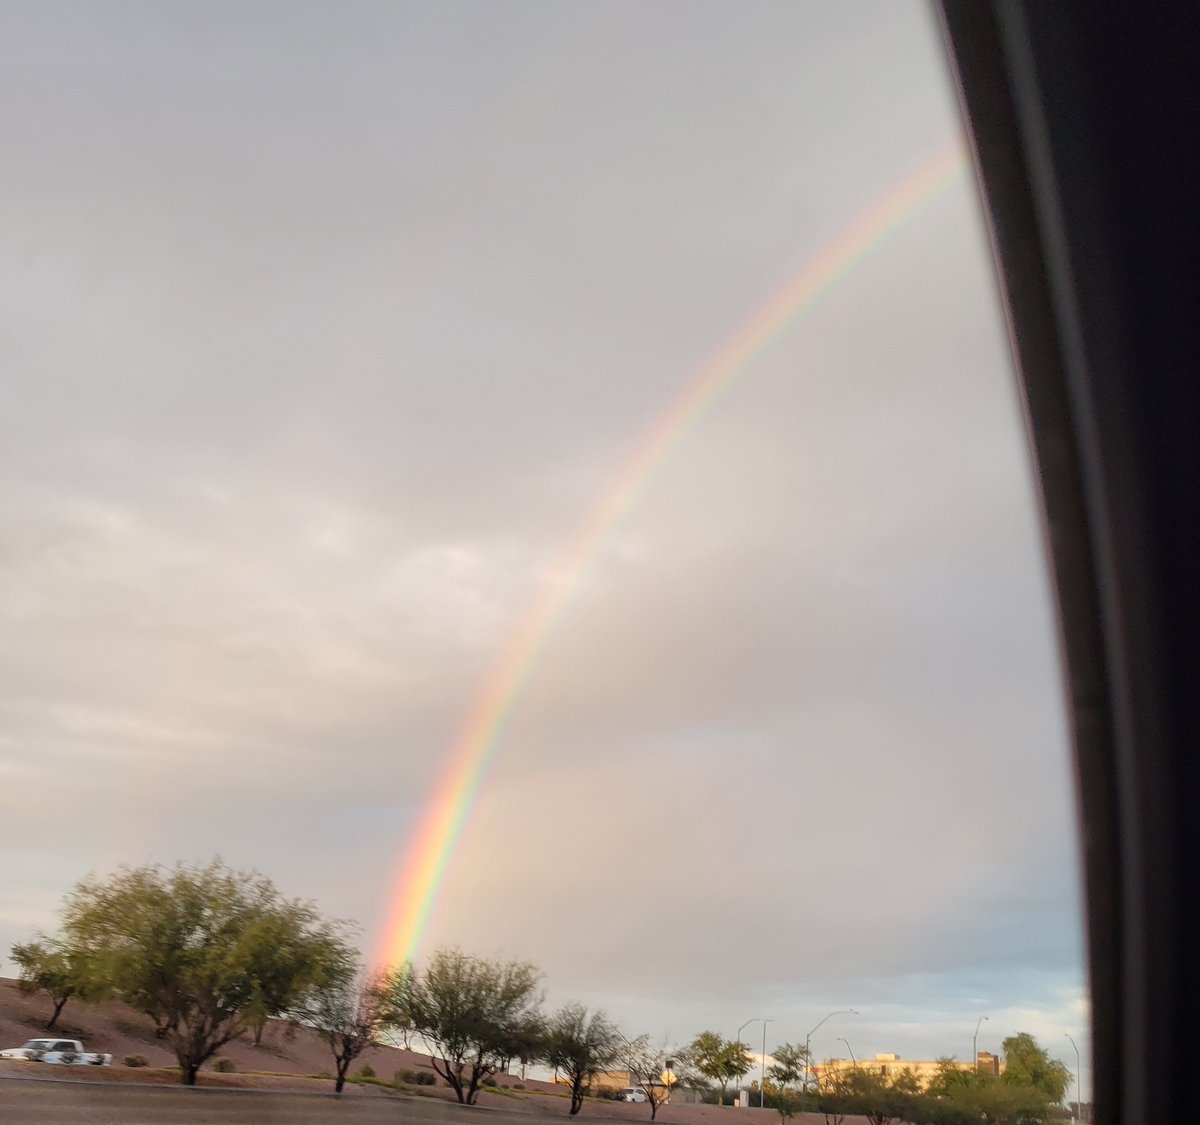 I saw a rainbow today. Beautiful. #GodsPromise